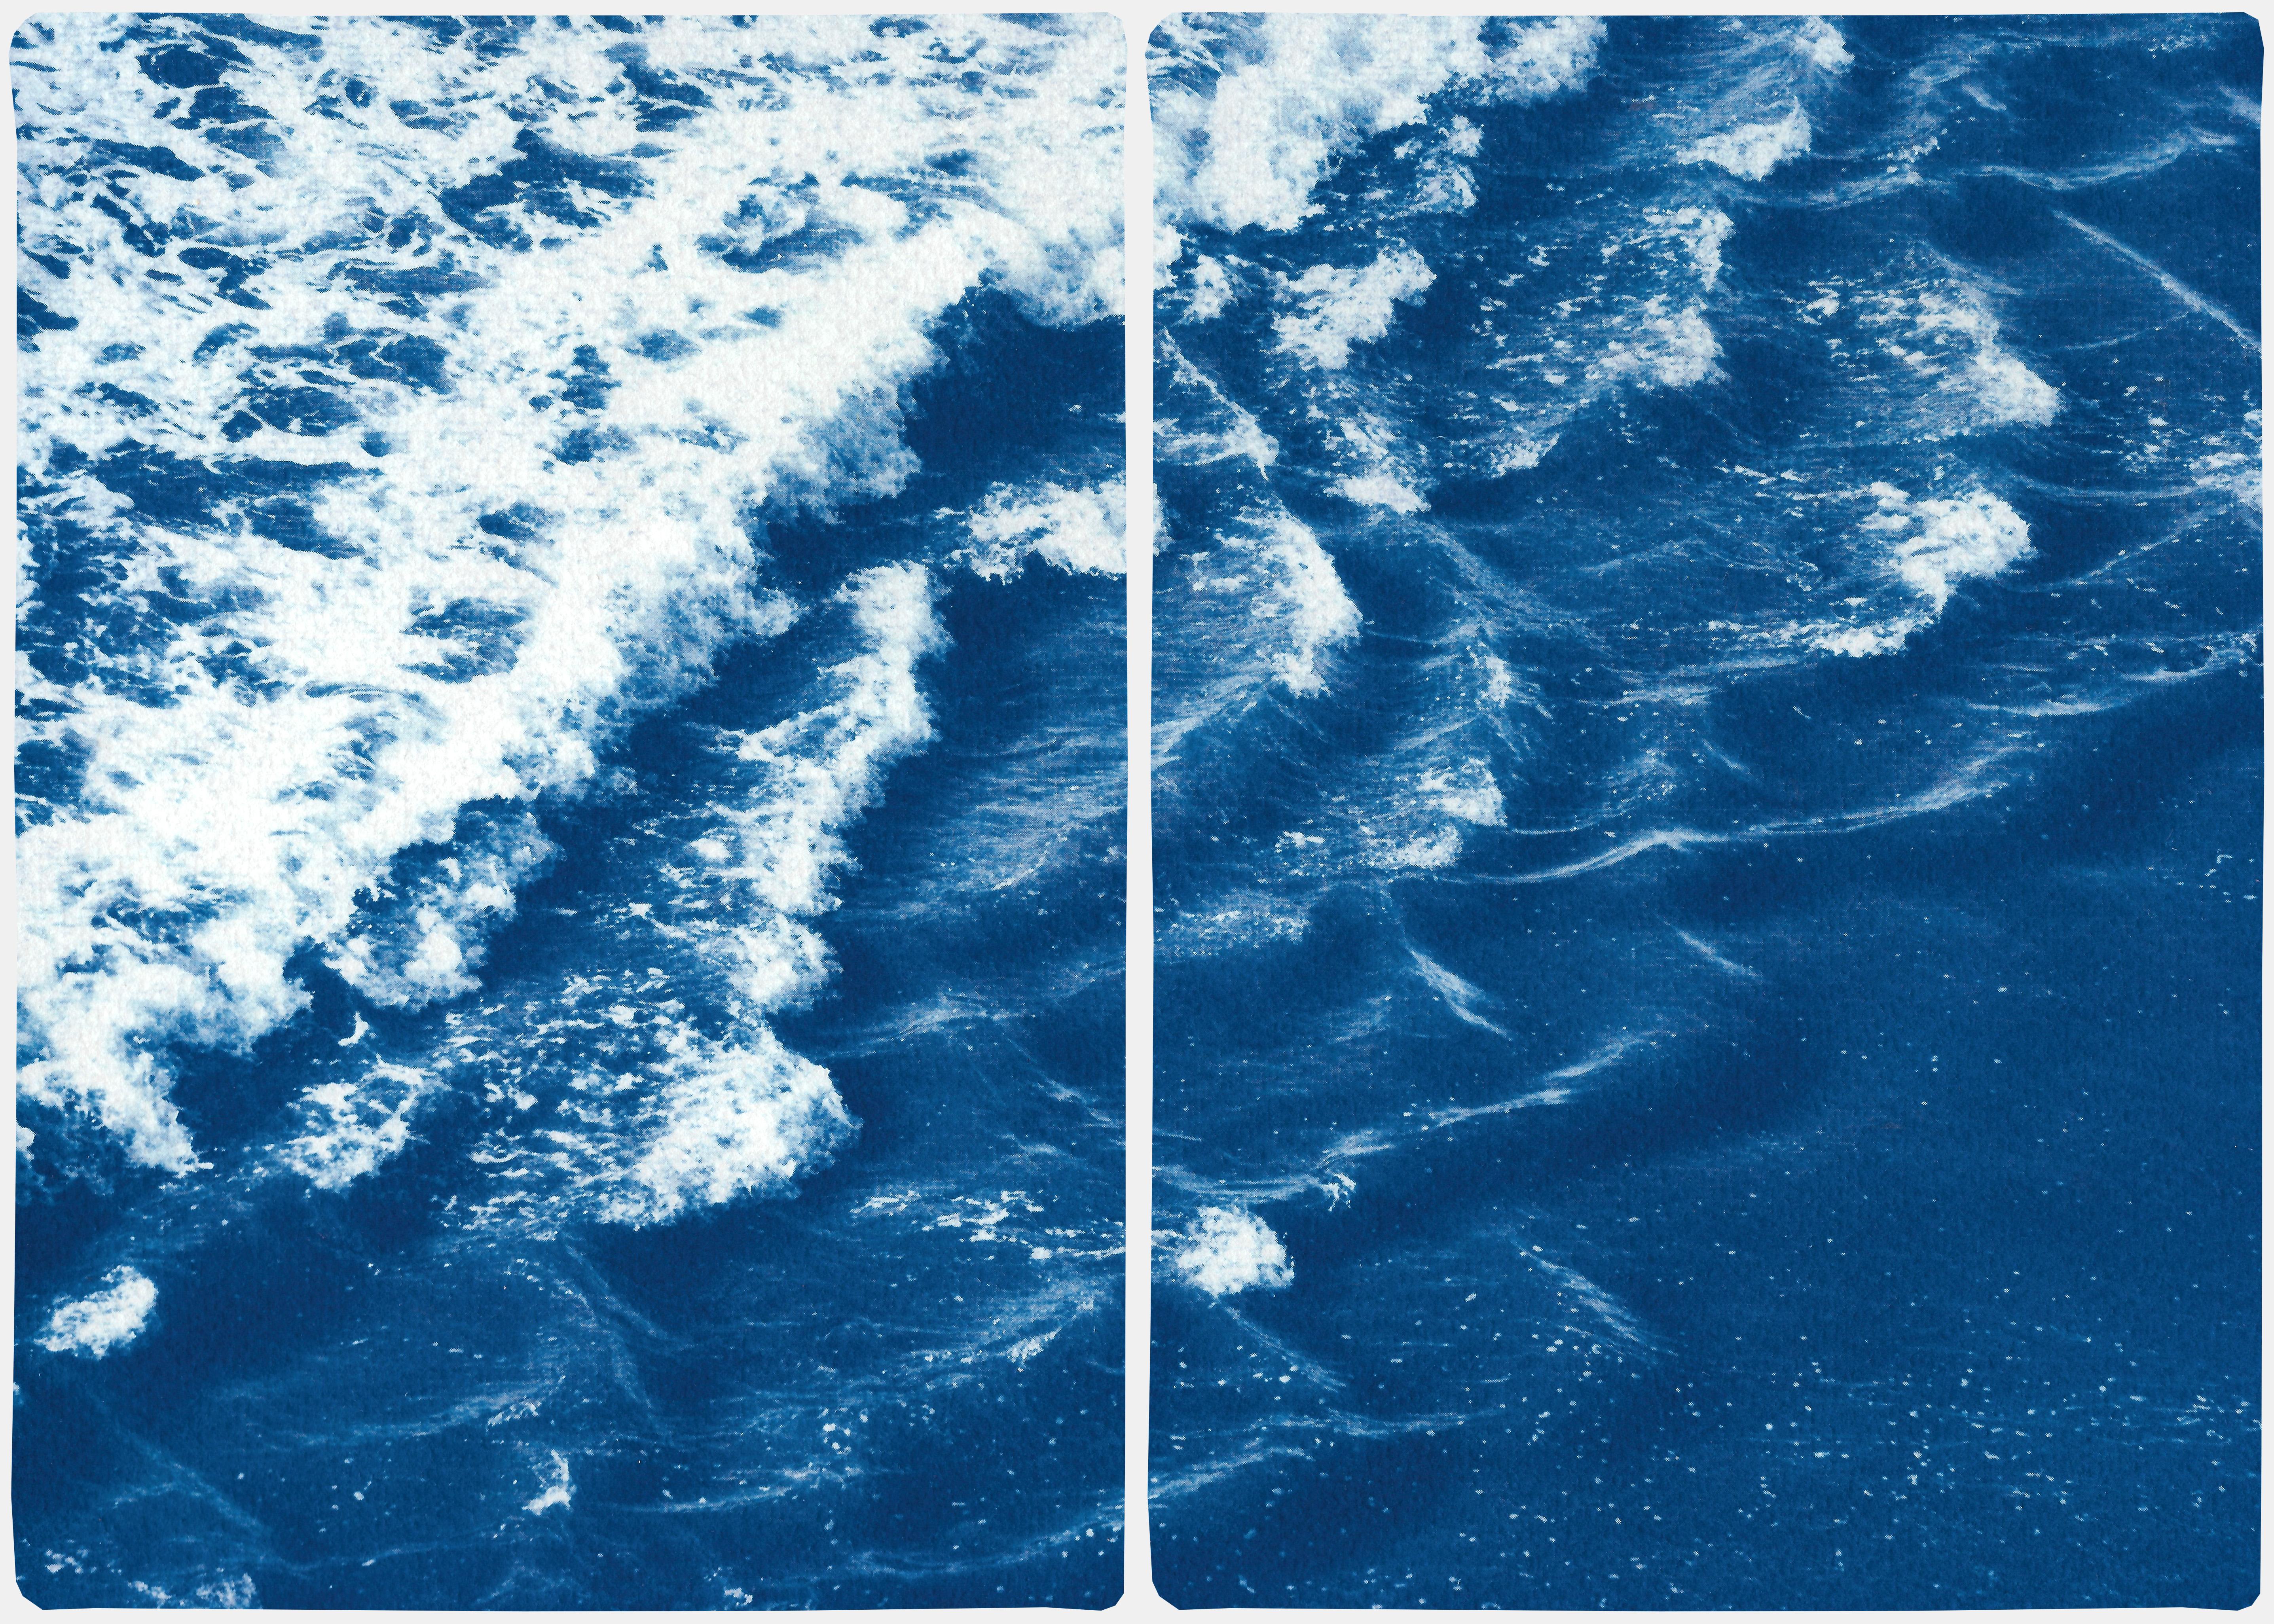 Rolling Waves off Sidney, Seascape Diptych Cyanotype, Australian Coast, Indigo